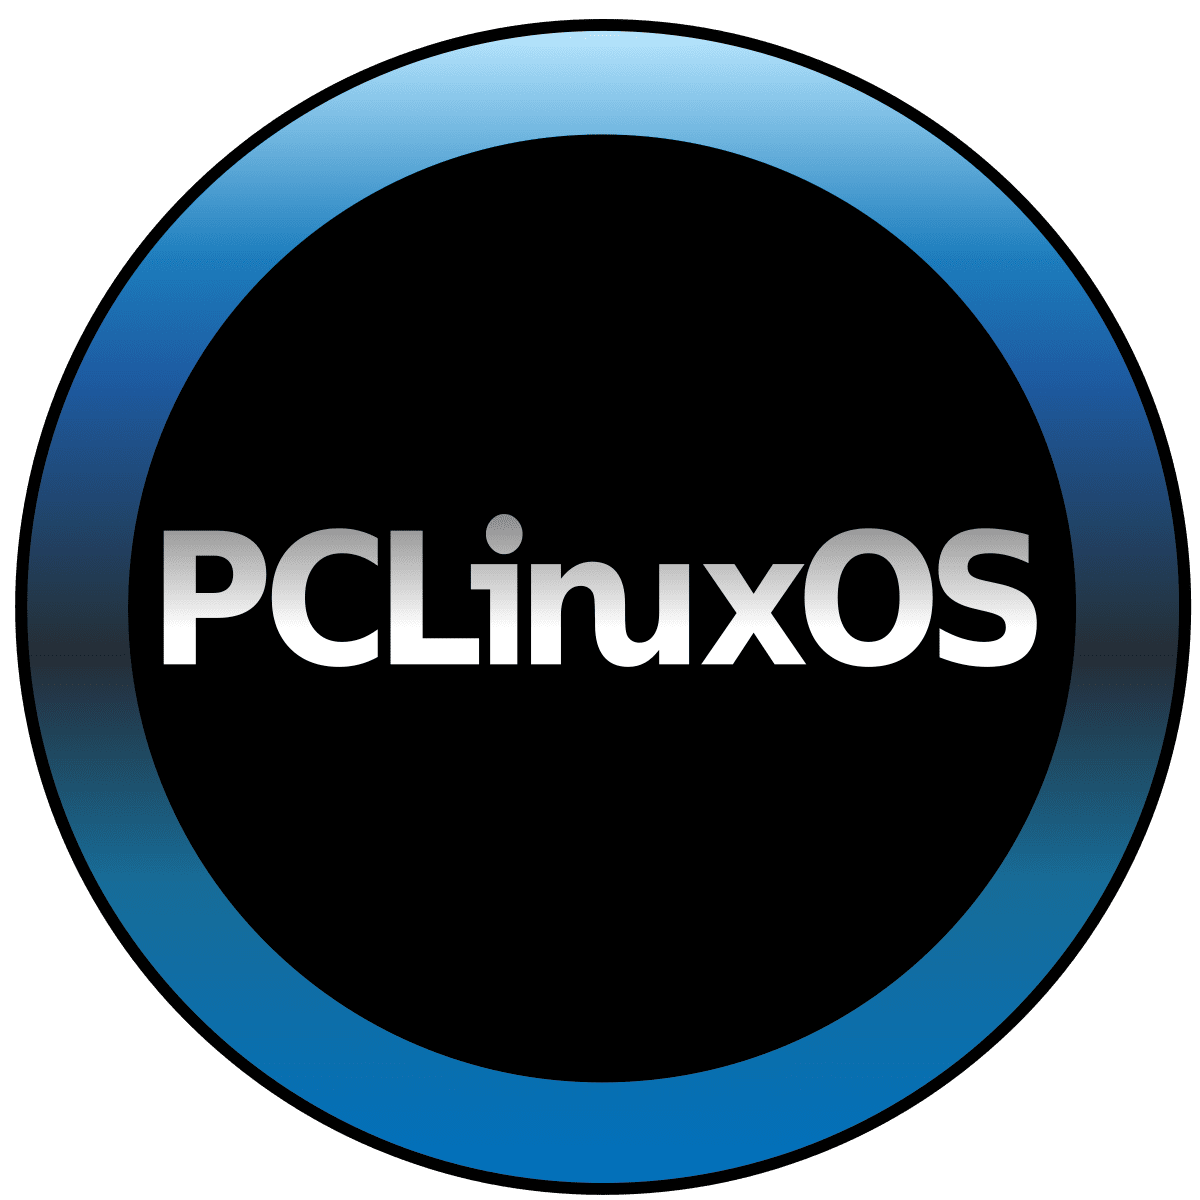 PC Linux OS logo